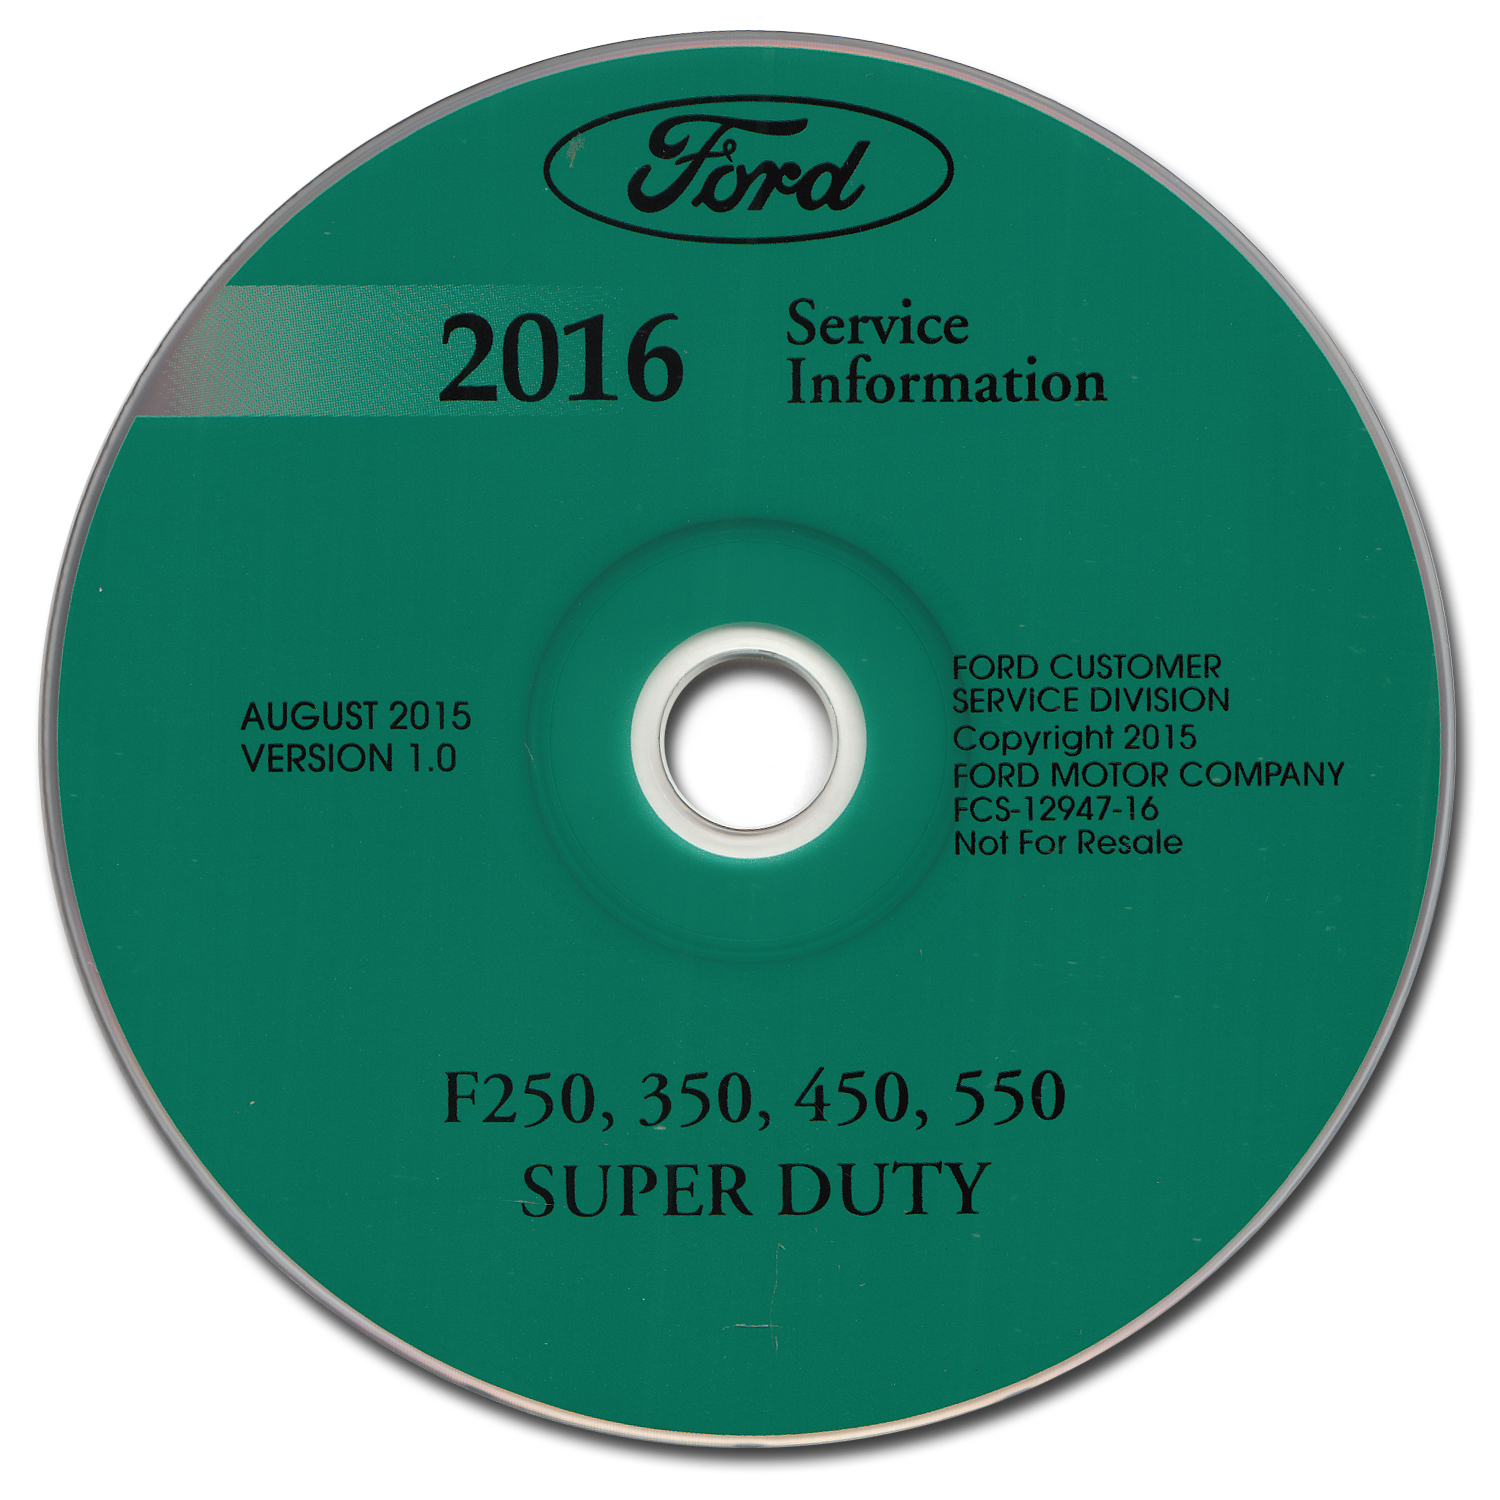 2016 Ford F250-F550 Super Duty Repair Shop Manual on CD-ROM Original